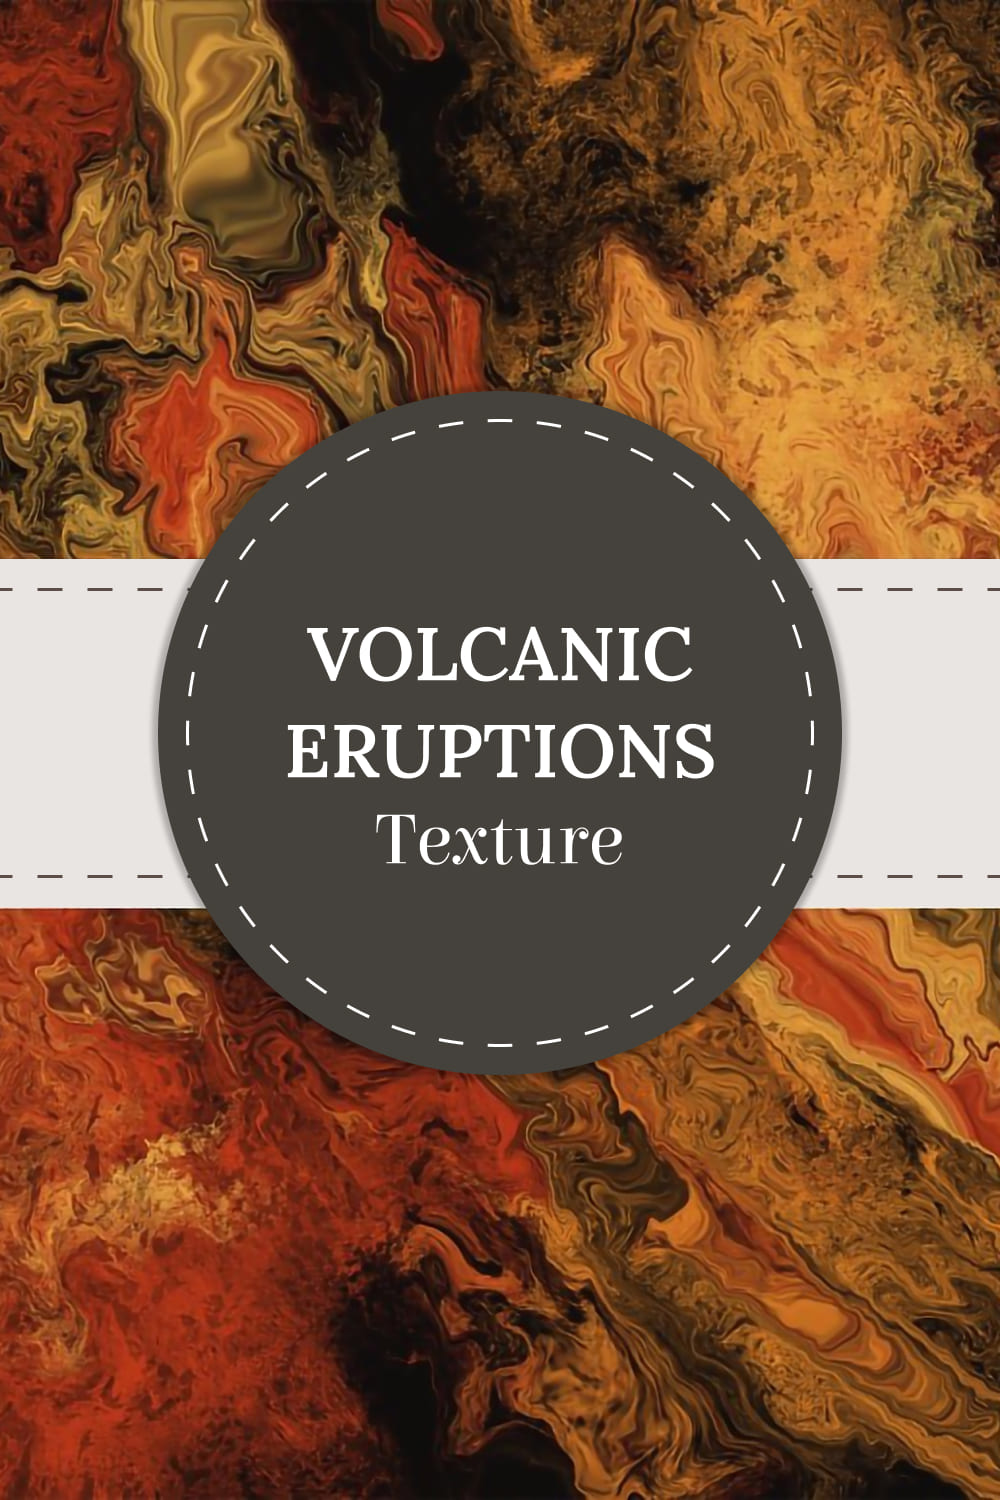 Volcanic Eruptions Texture - pinterest image preview.